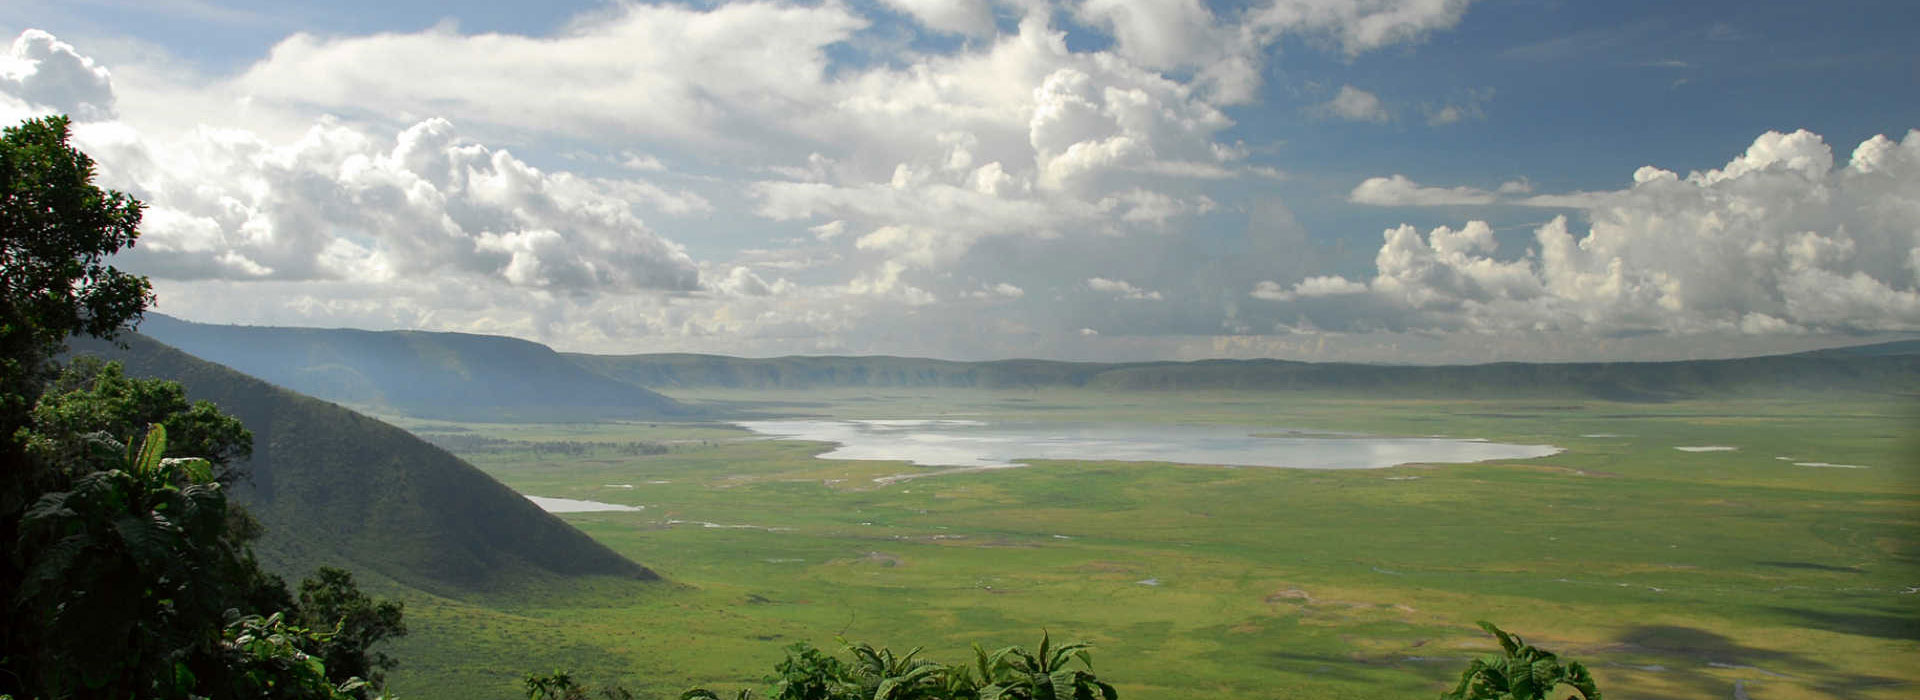 Ngorongoro Highlands Trekking Tour